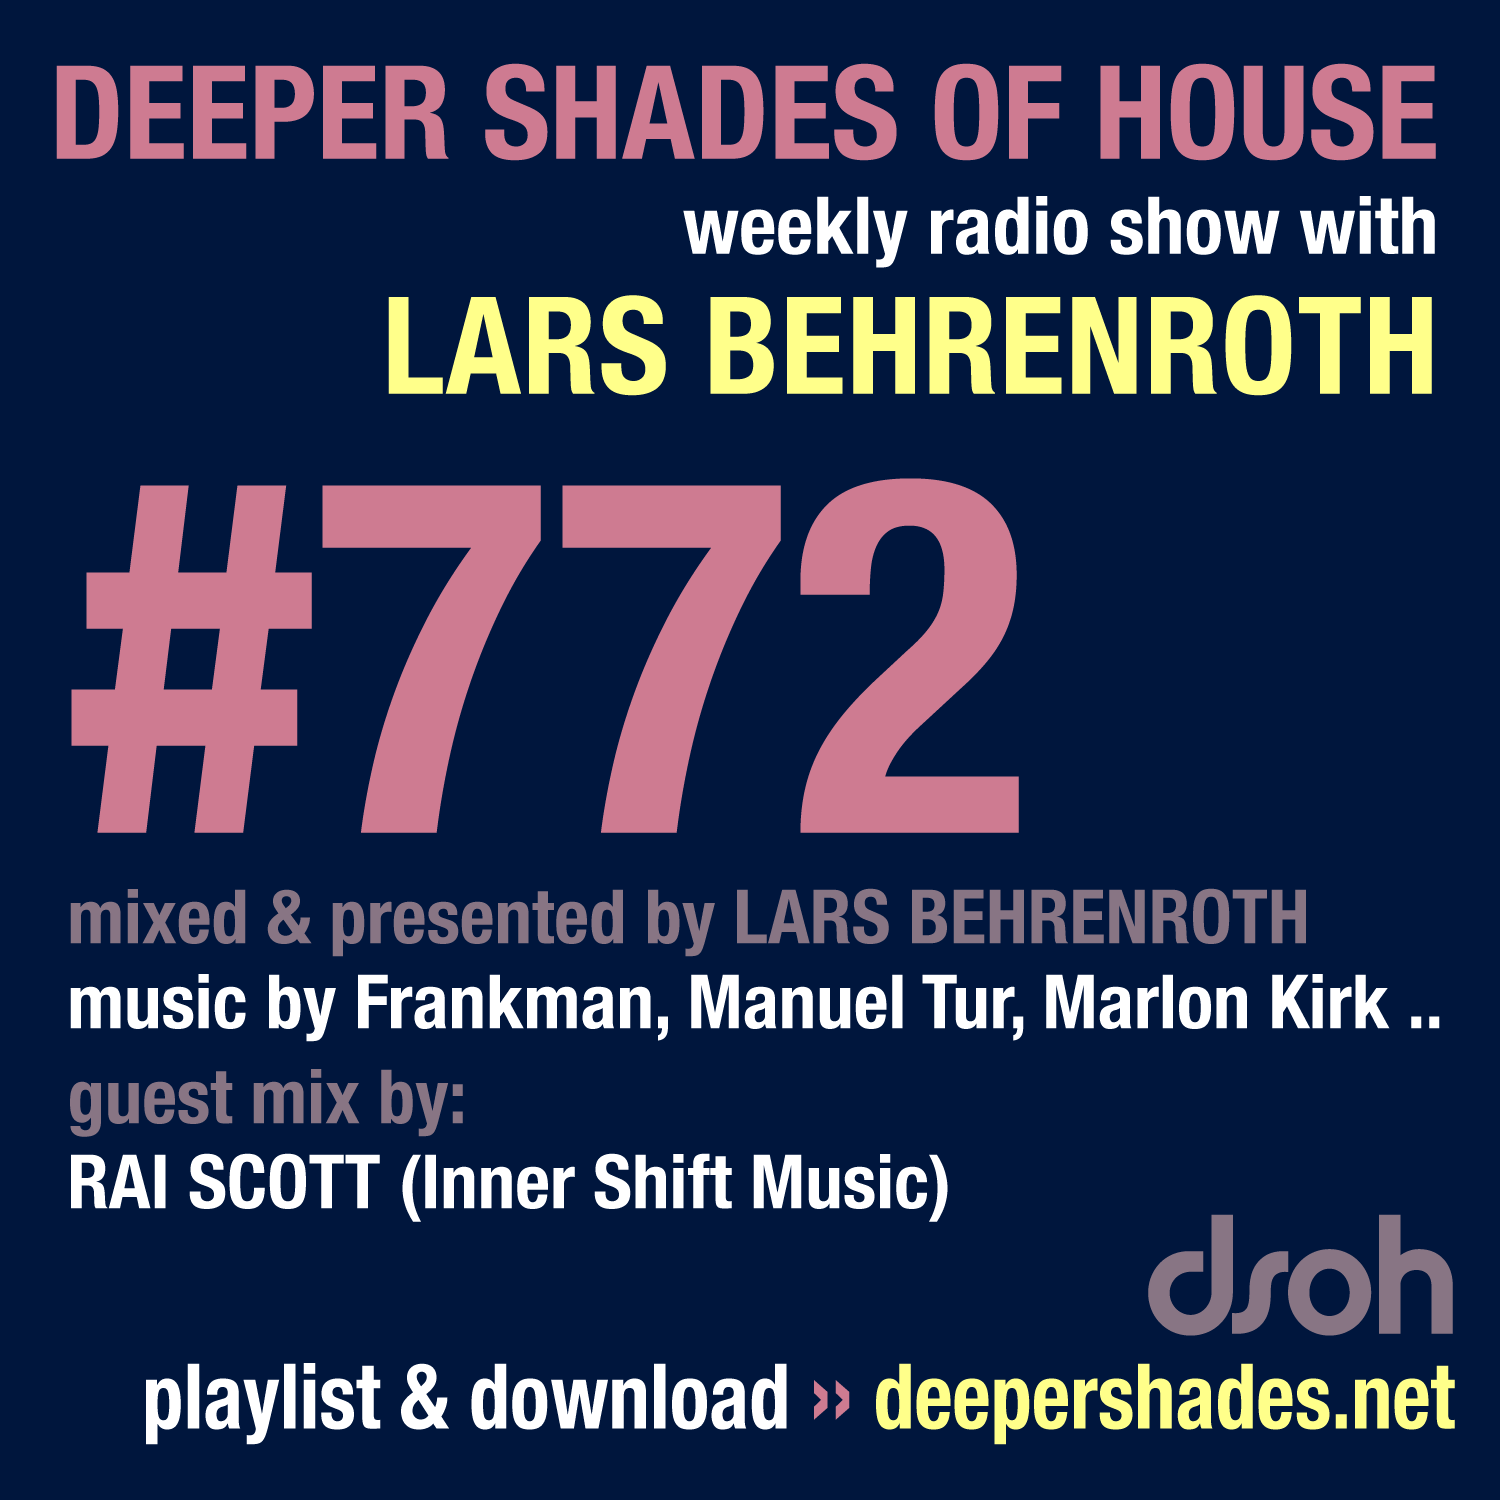 Deep House Radio Show Deeper Shades Of House 772